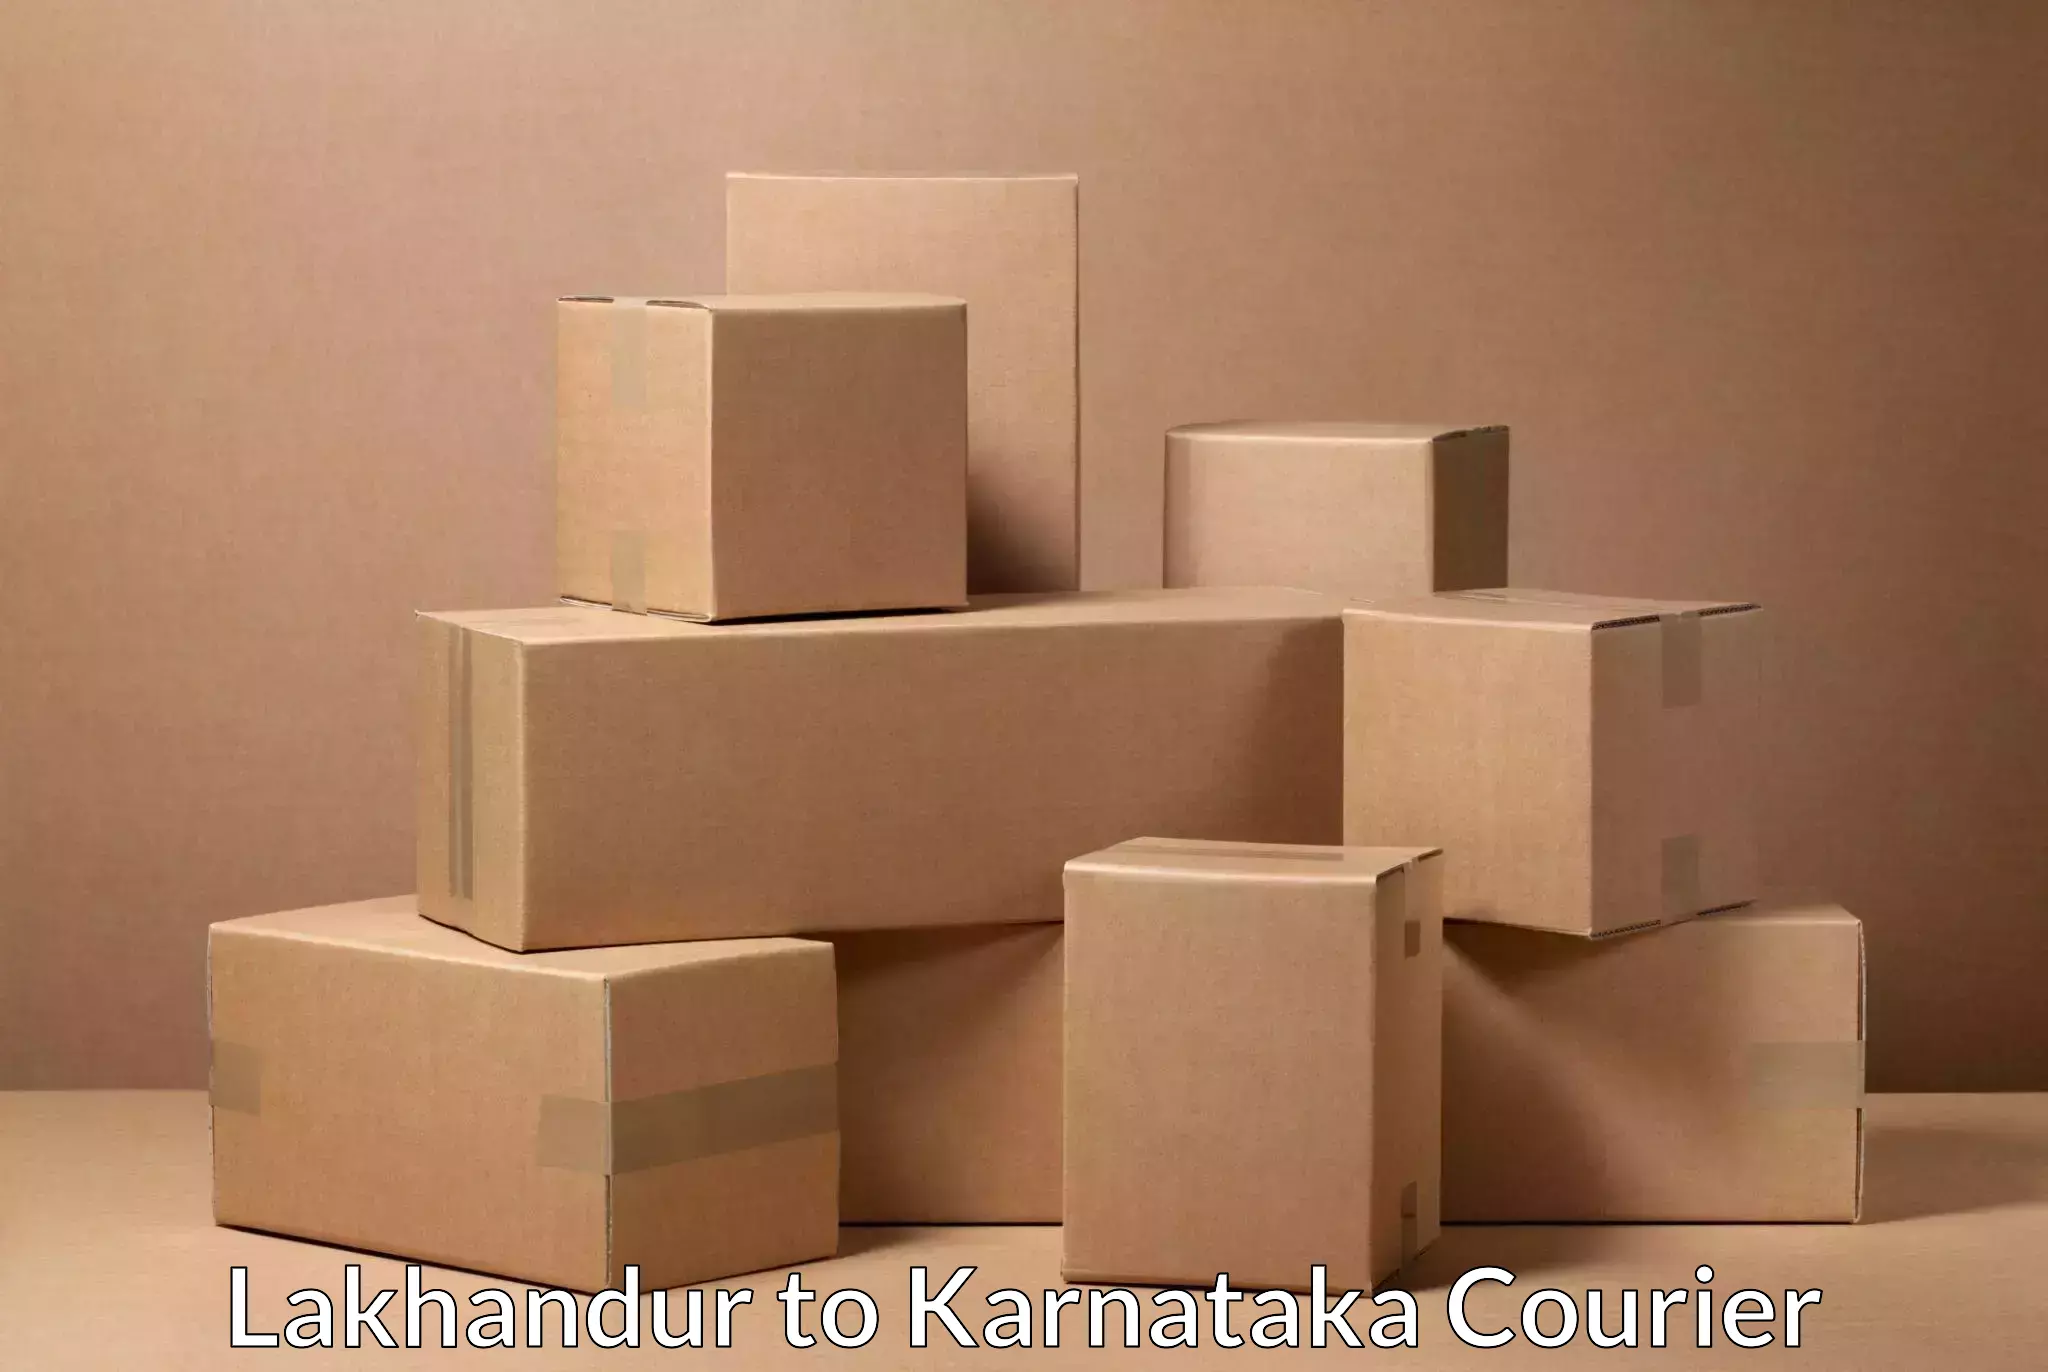 Bulk courier orders Lakhandur to Yenepoya Mangalore